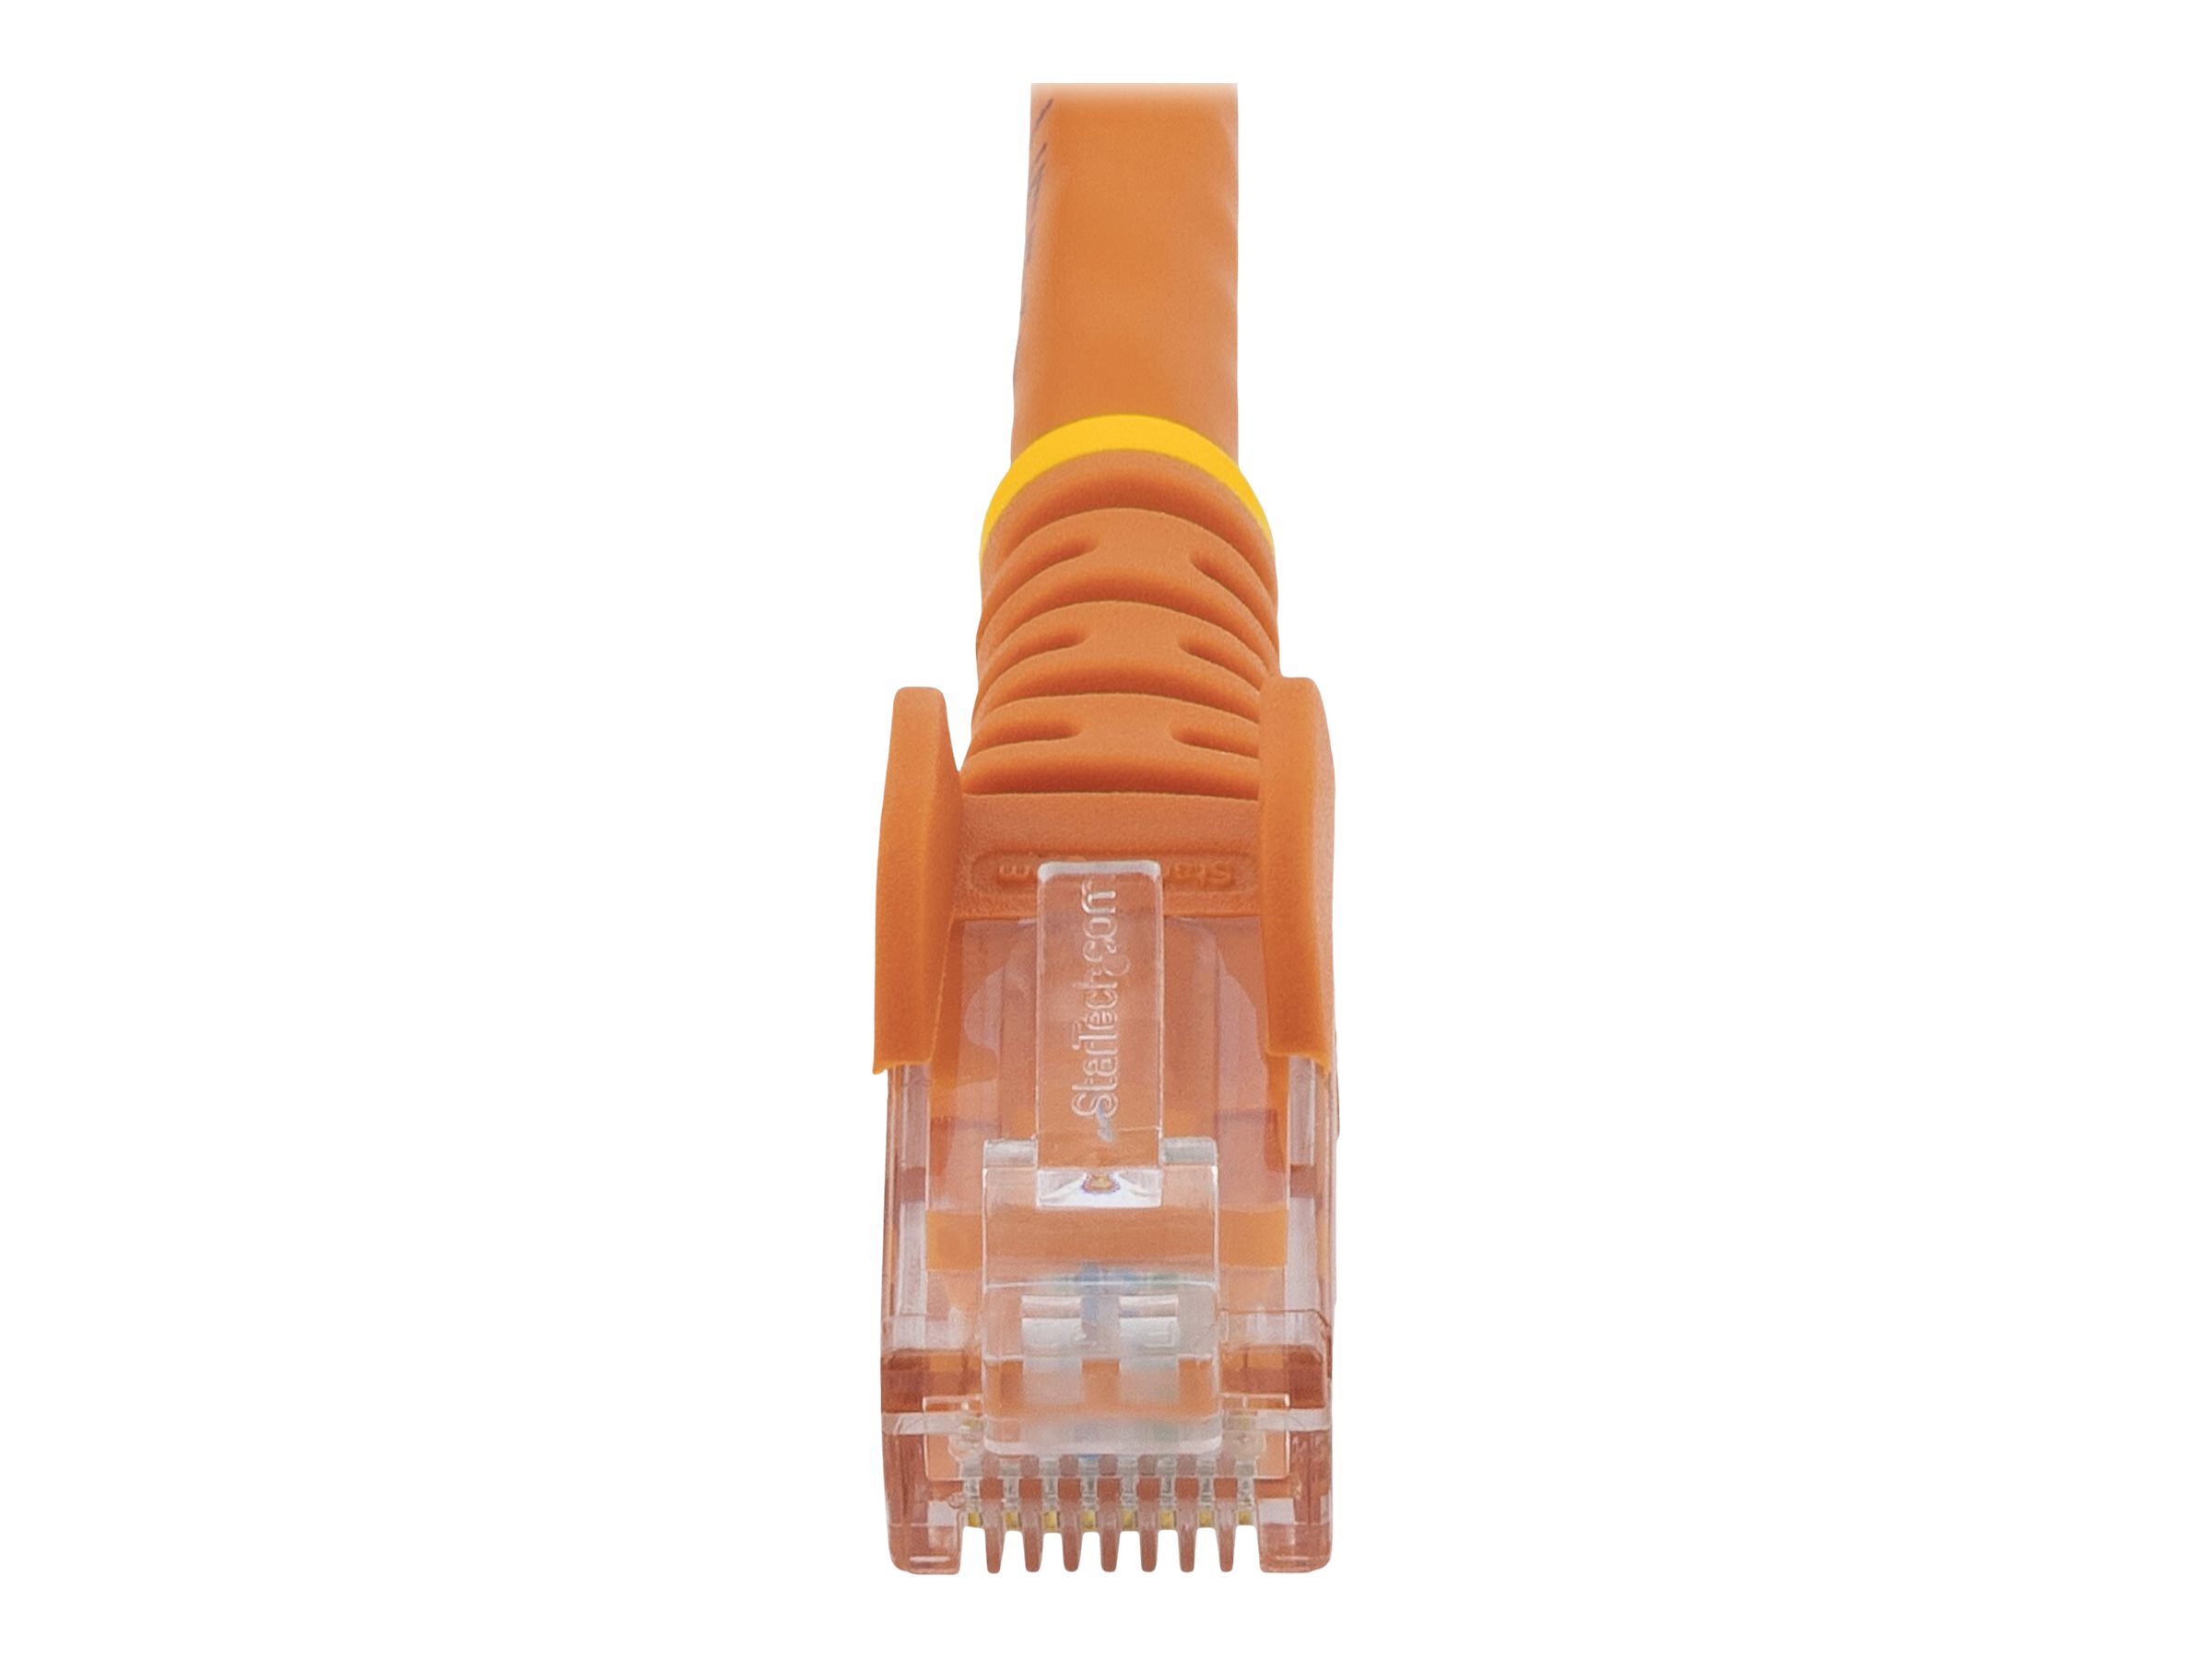 Startechcom Cable De Red De 05M Naranja Cat6 Utp Ethernet Gigabit Rj45 Sin Enganches  Latiguillo Snagless De 50Cm  Cable De Red  Rj45 M A Rj45 M  50 Cm  Utp  Cat 6  Moldeado Sin Enganches Trenzado  Naranja - N6PATC50CMOR